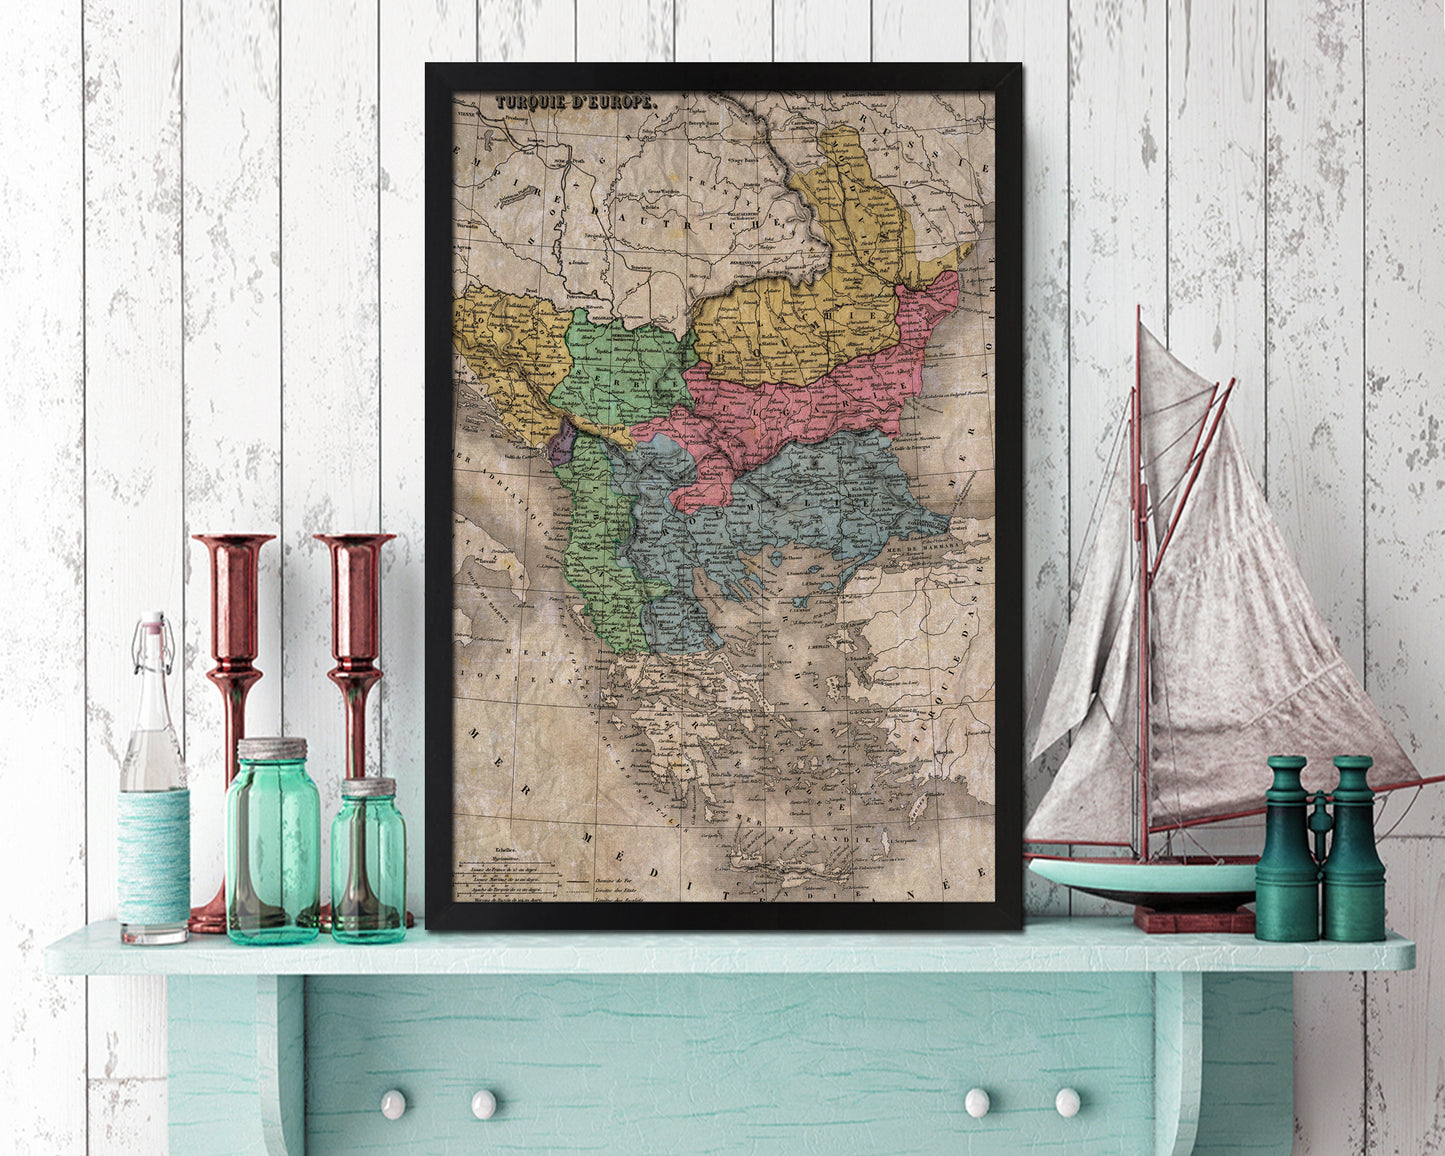 Arkansas Louisiana Mississippi Historical Map Wood Framed Print Art Wall Decor Gifts